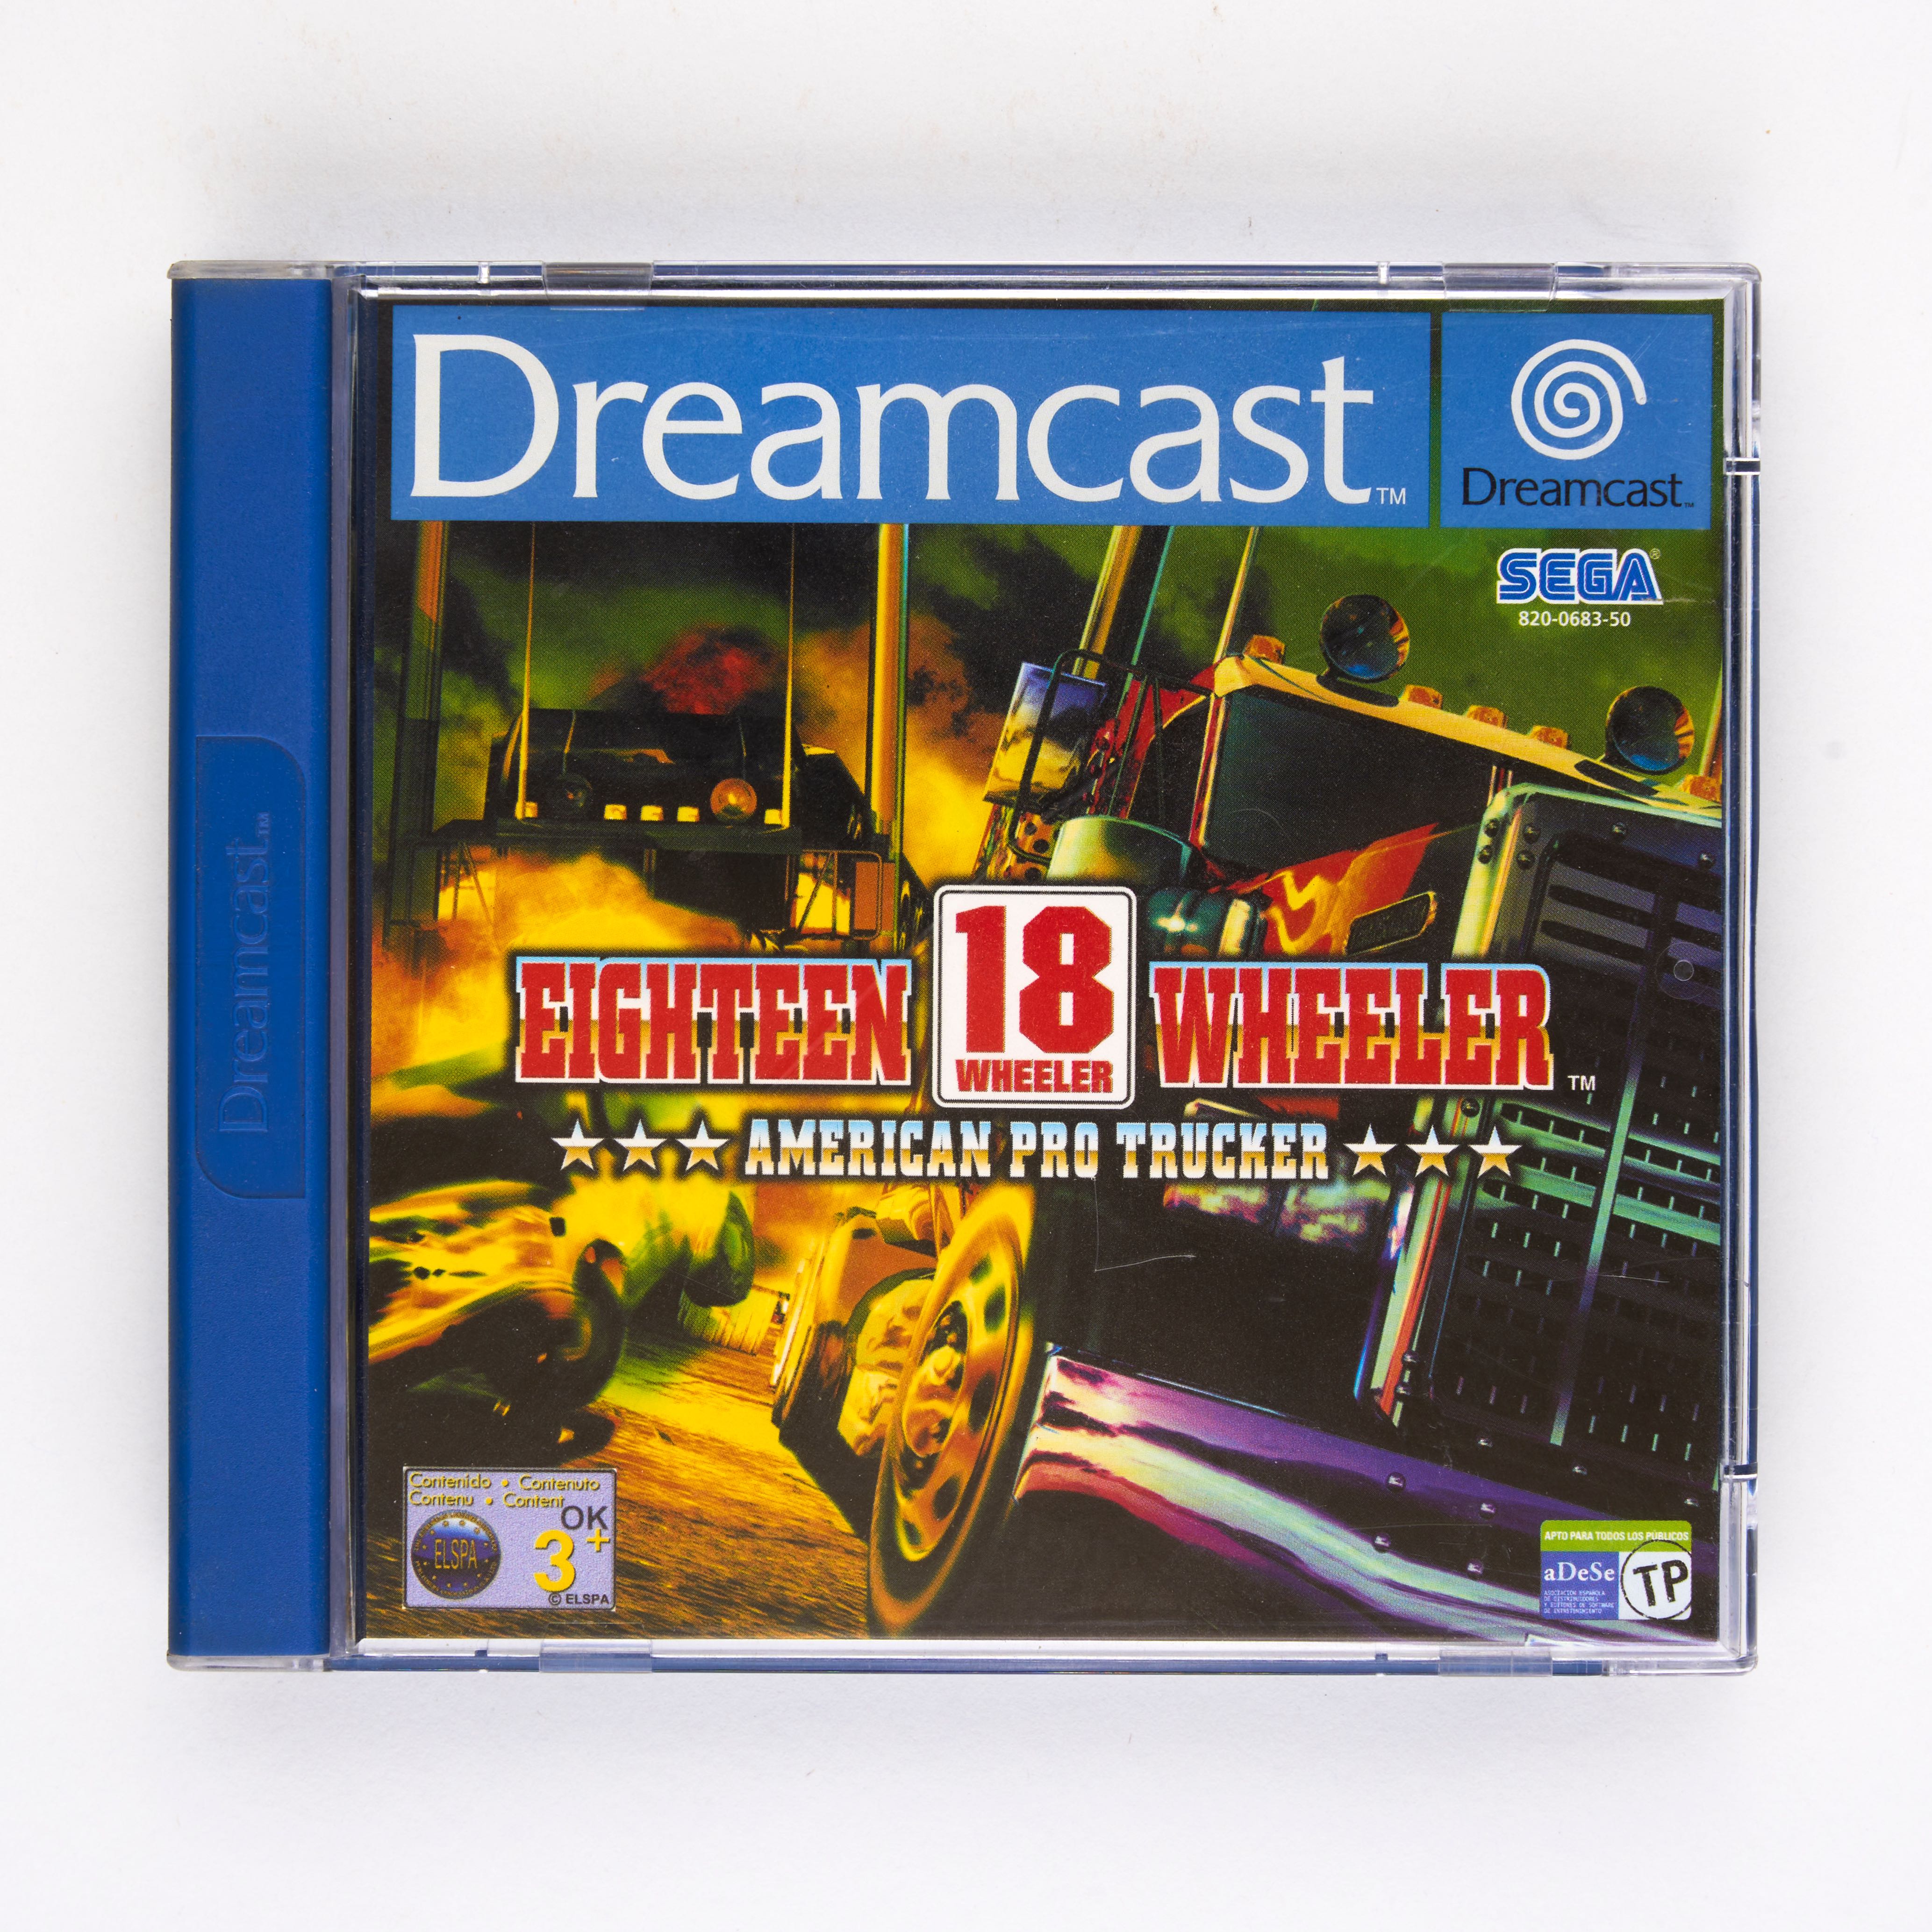 SEGA - 18 Wheeler - Dreamcast - Complete In Box